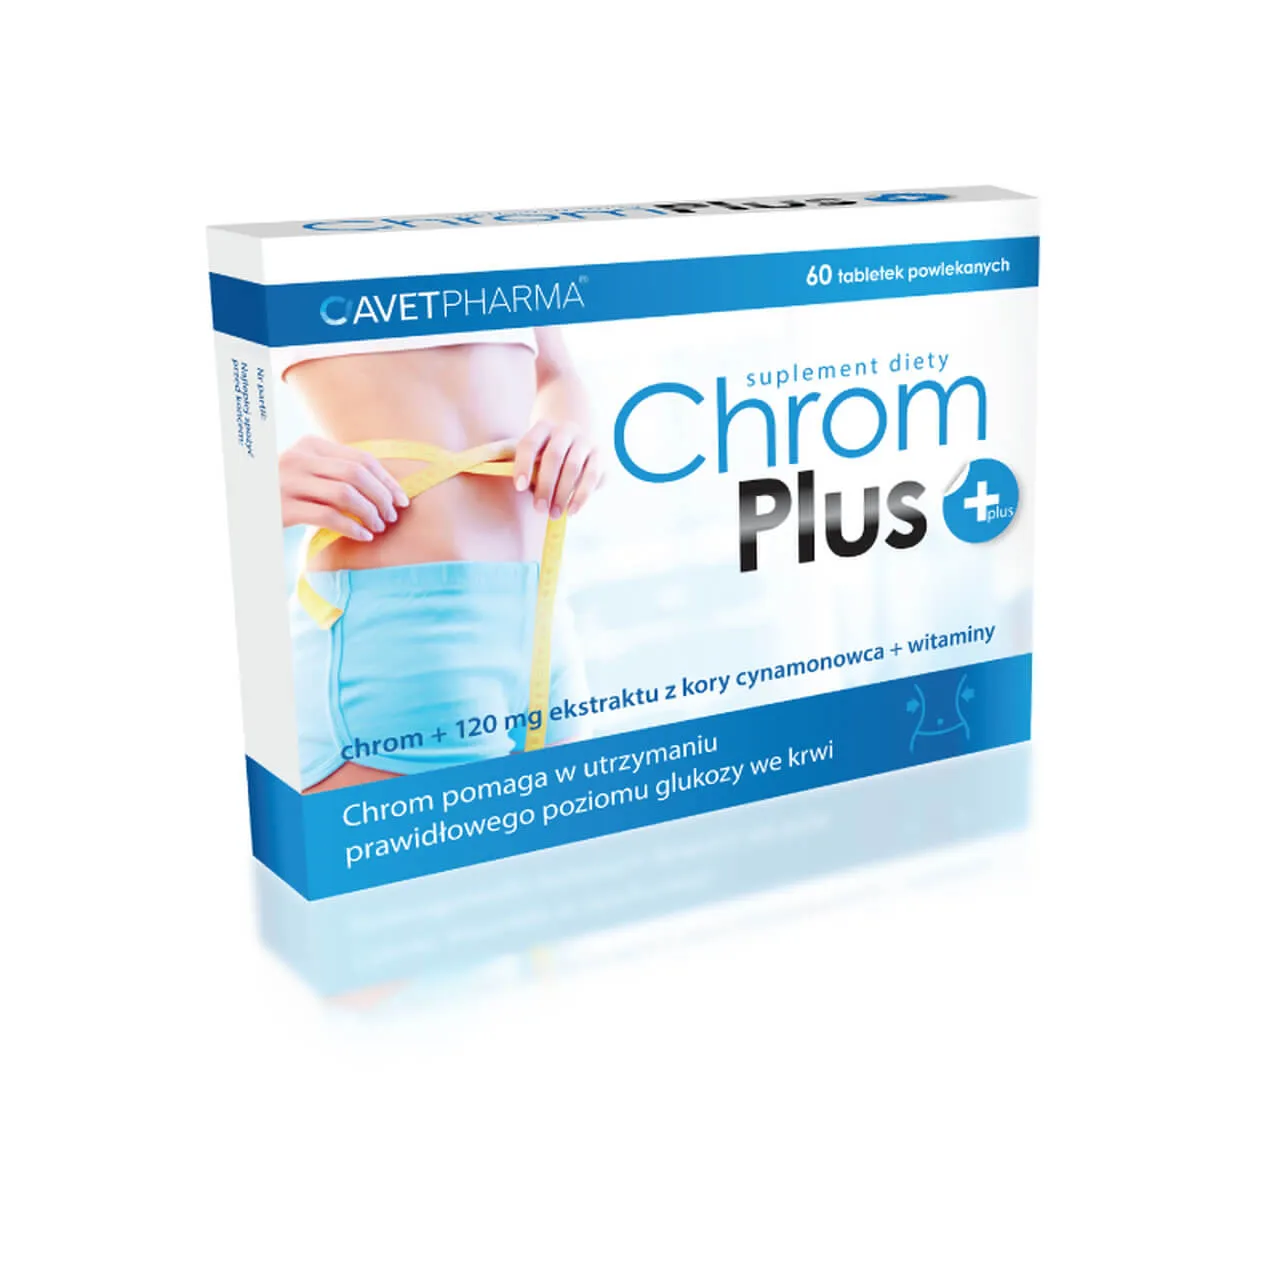 Chrom Plus, suplement diety, 60 tabletek